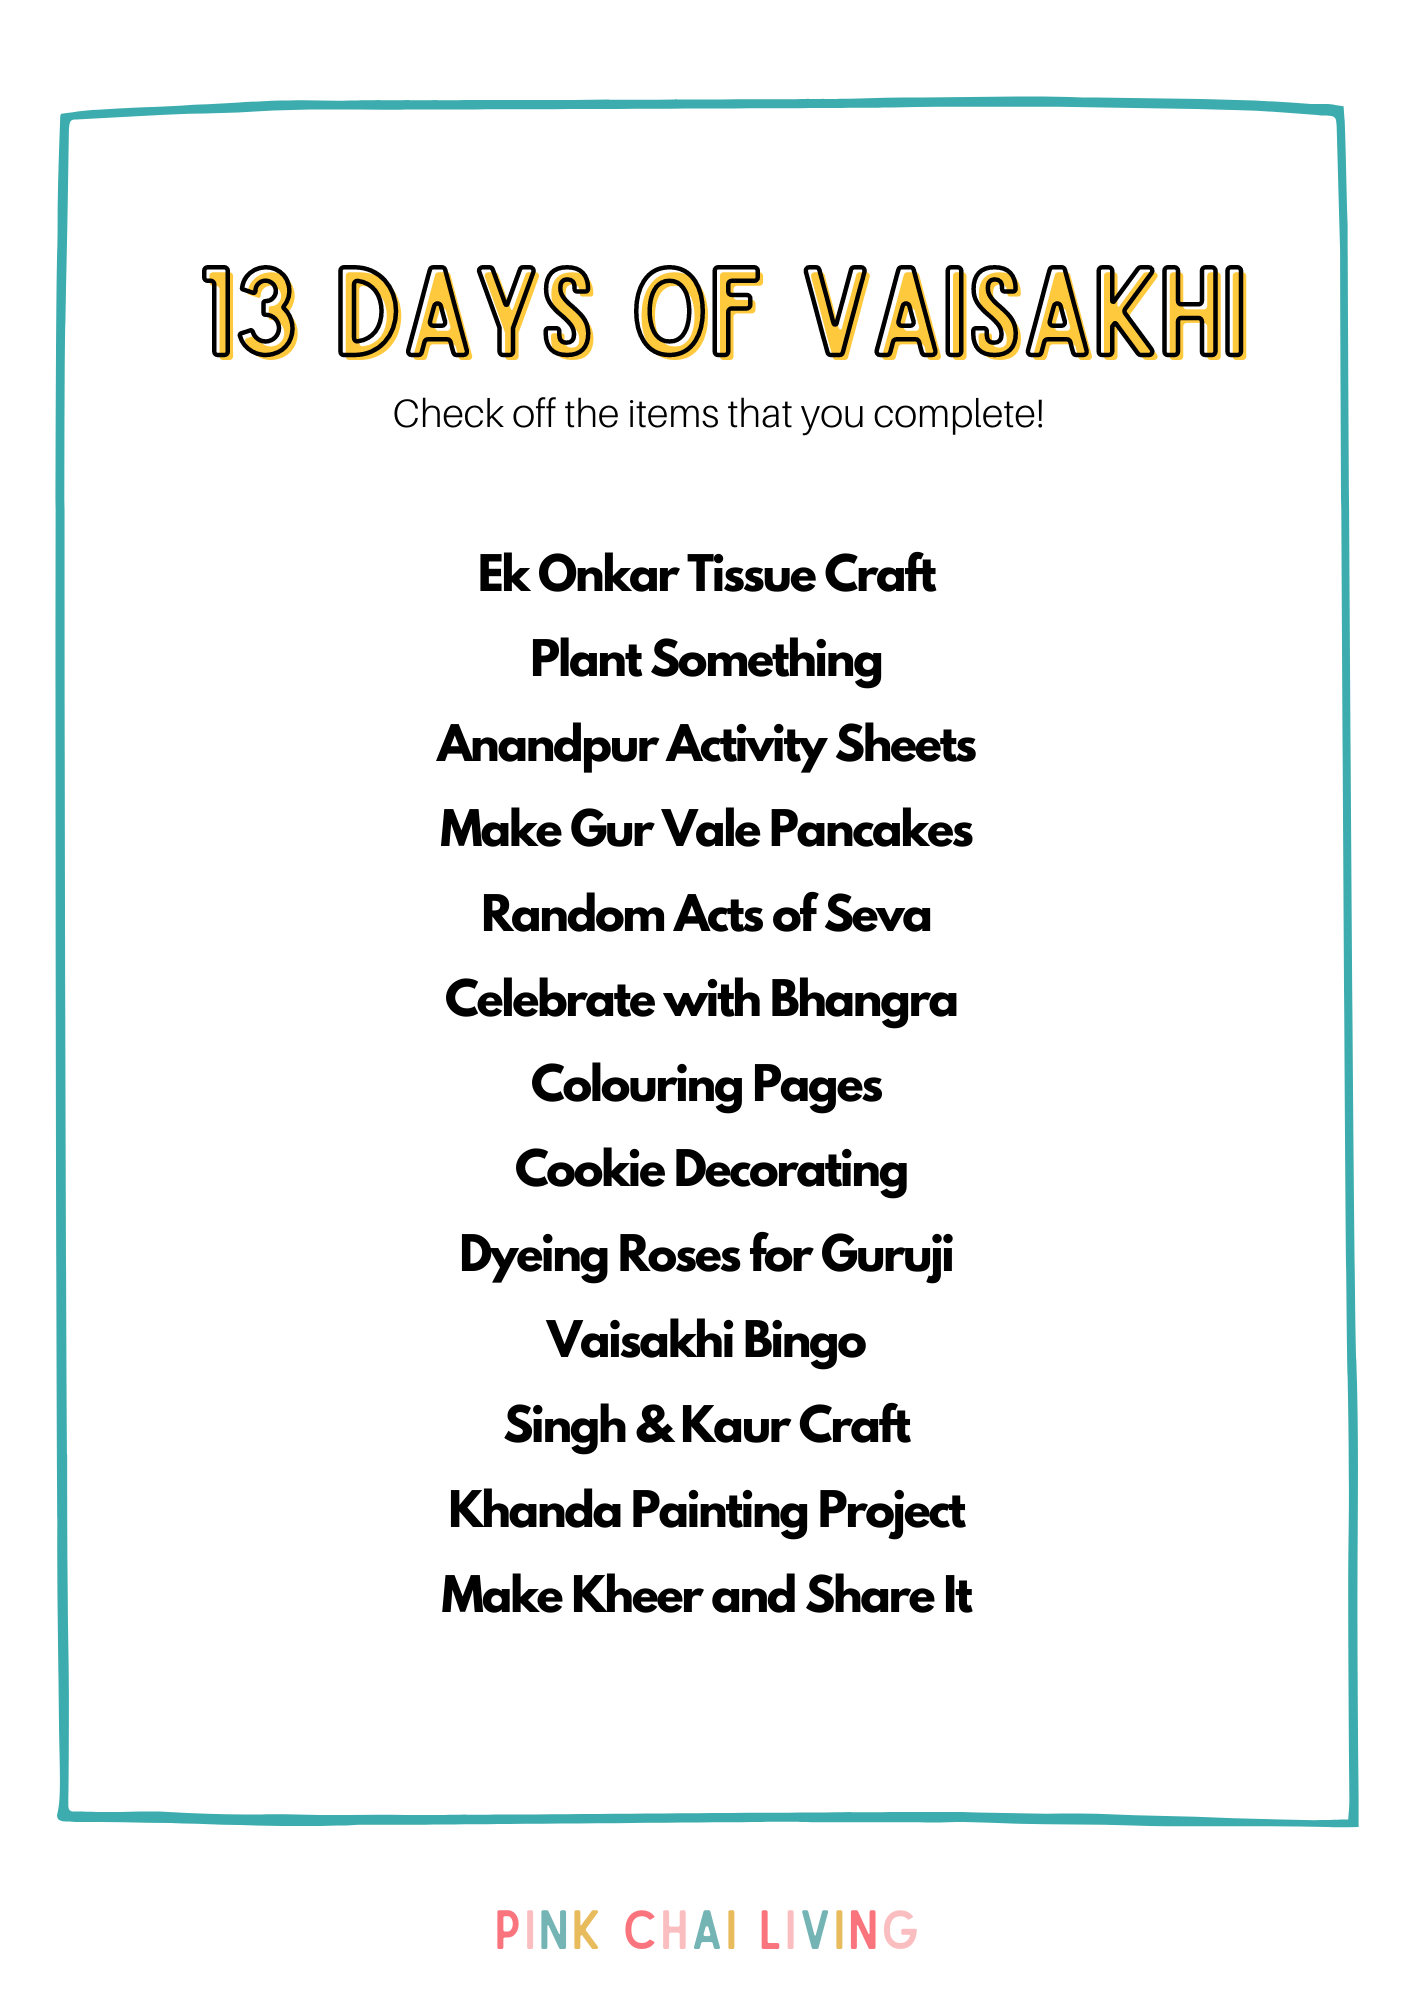 13-Days-of-Vaisakhi-Checklist-1